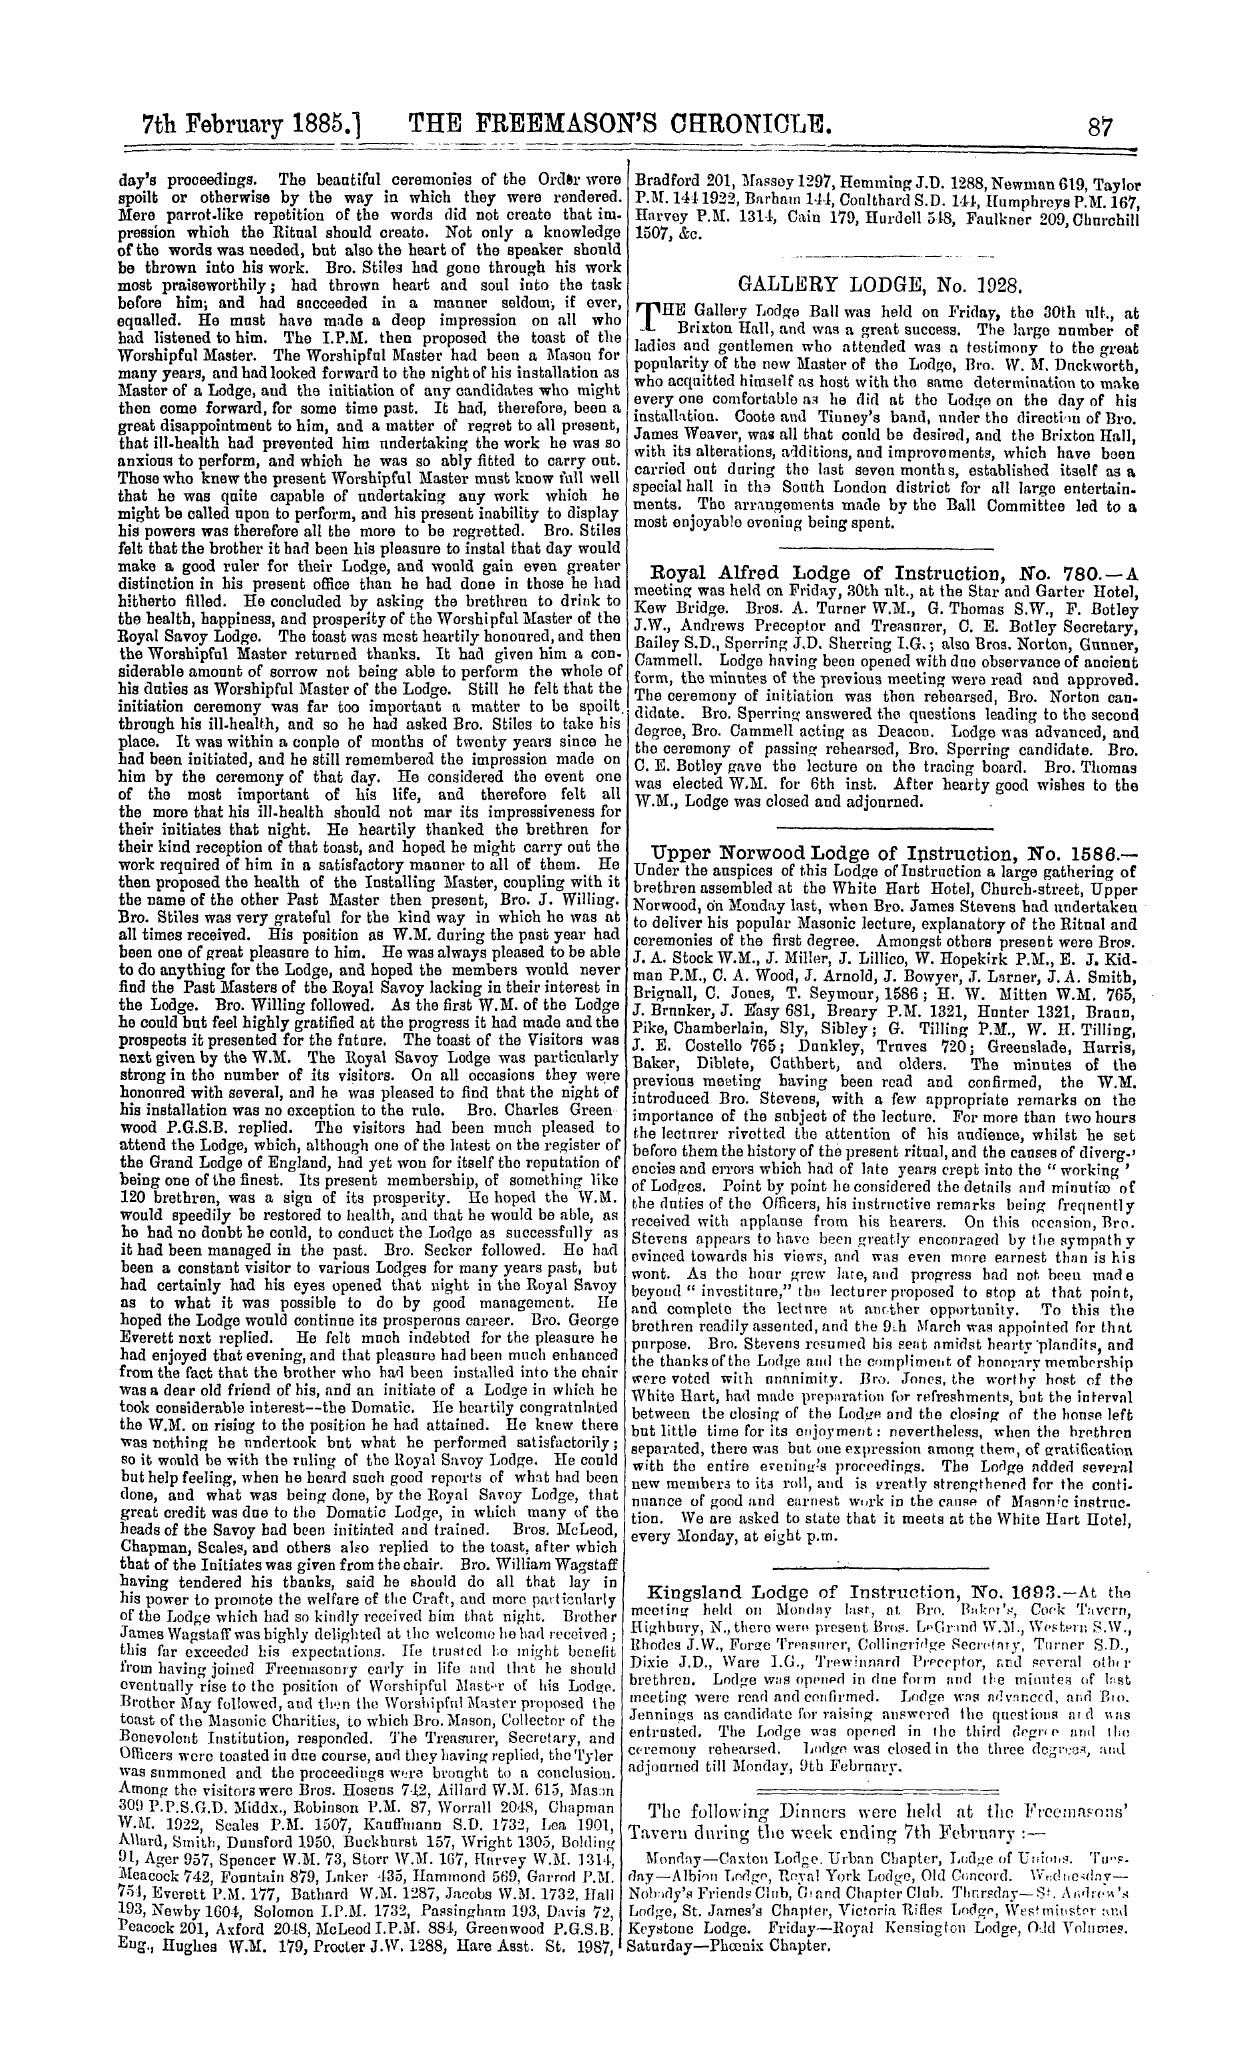 The Freemason's Chronicle: 1885-02-07 - Installation Meetings, &C.